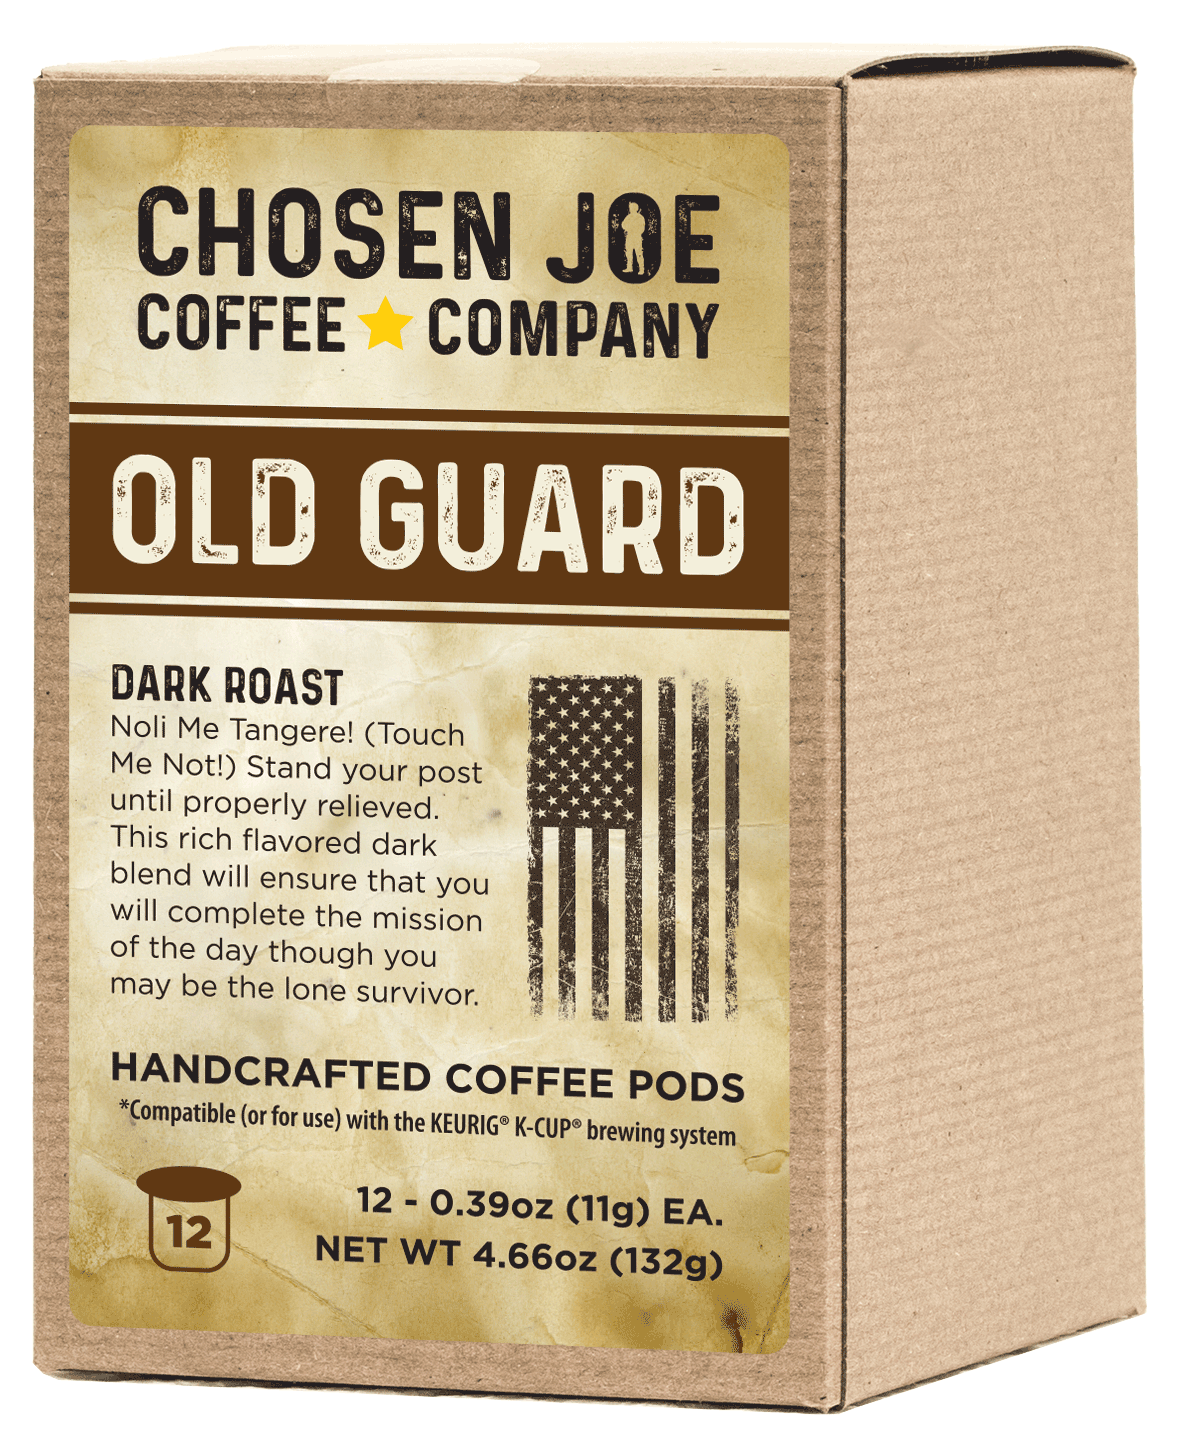 Traitor Joe Collectors Roast – Minutemen Coffee Company